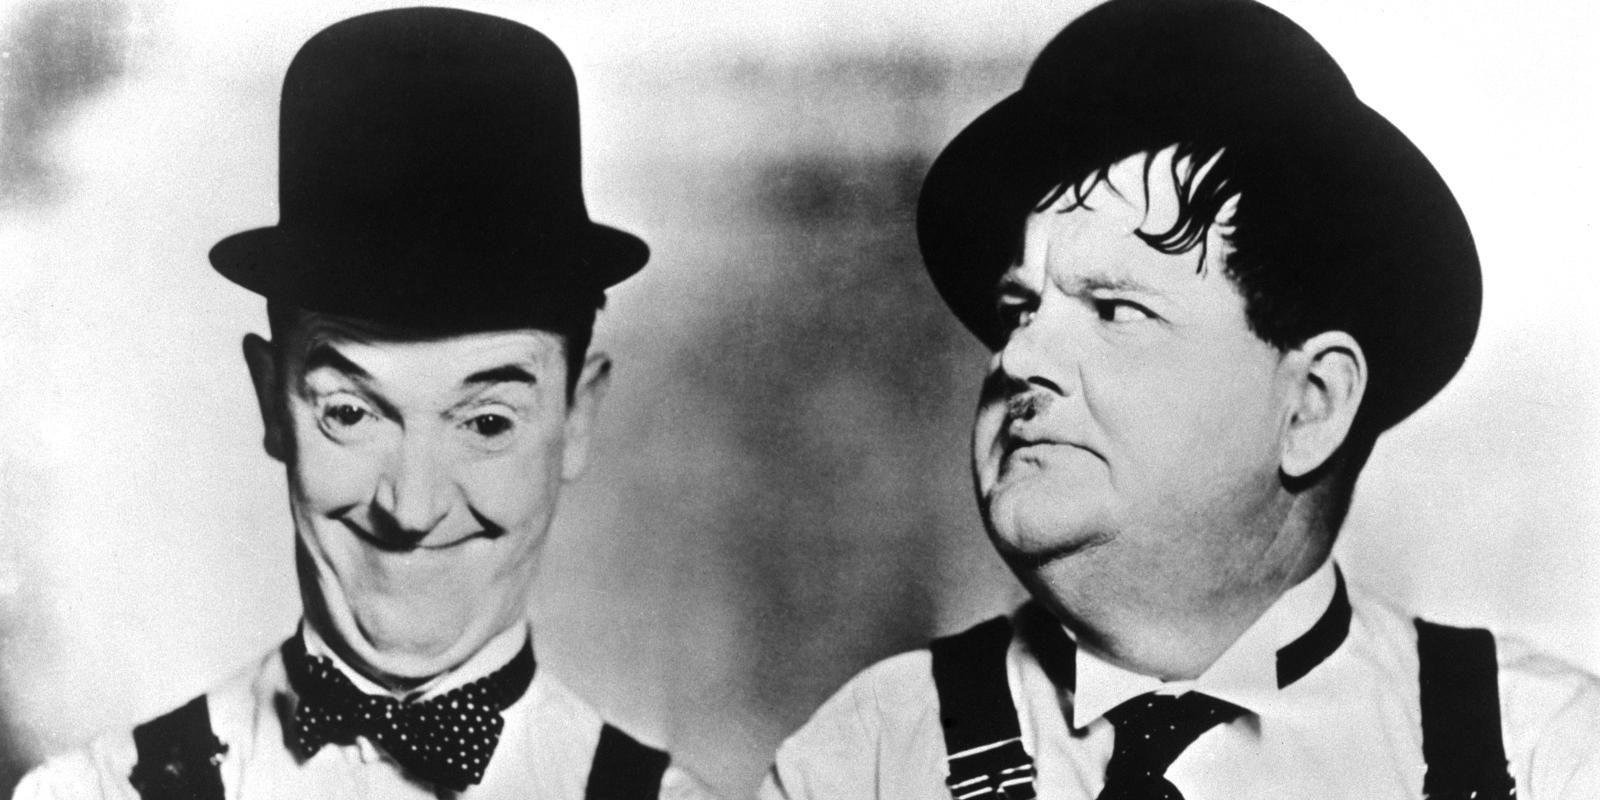 Два комика. Олли Лорел и Харди. Великого немого Стэн Лорел. Комики начала 20 века.